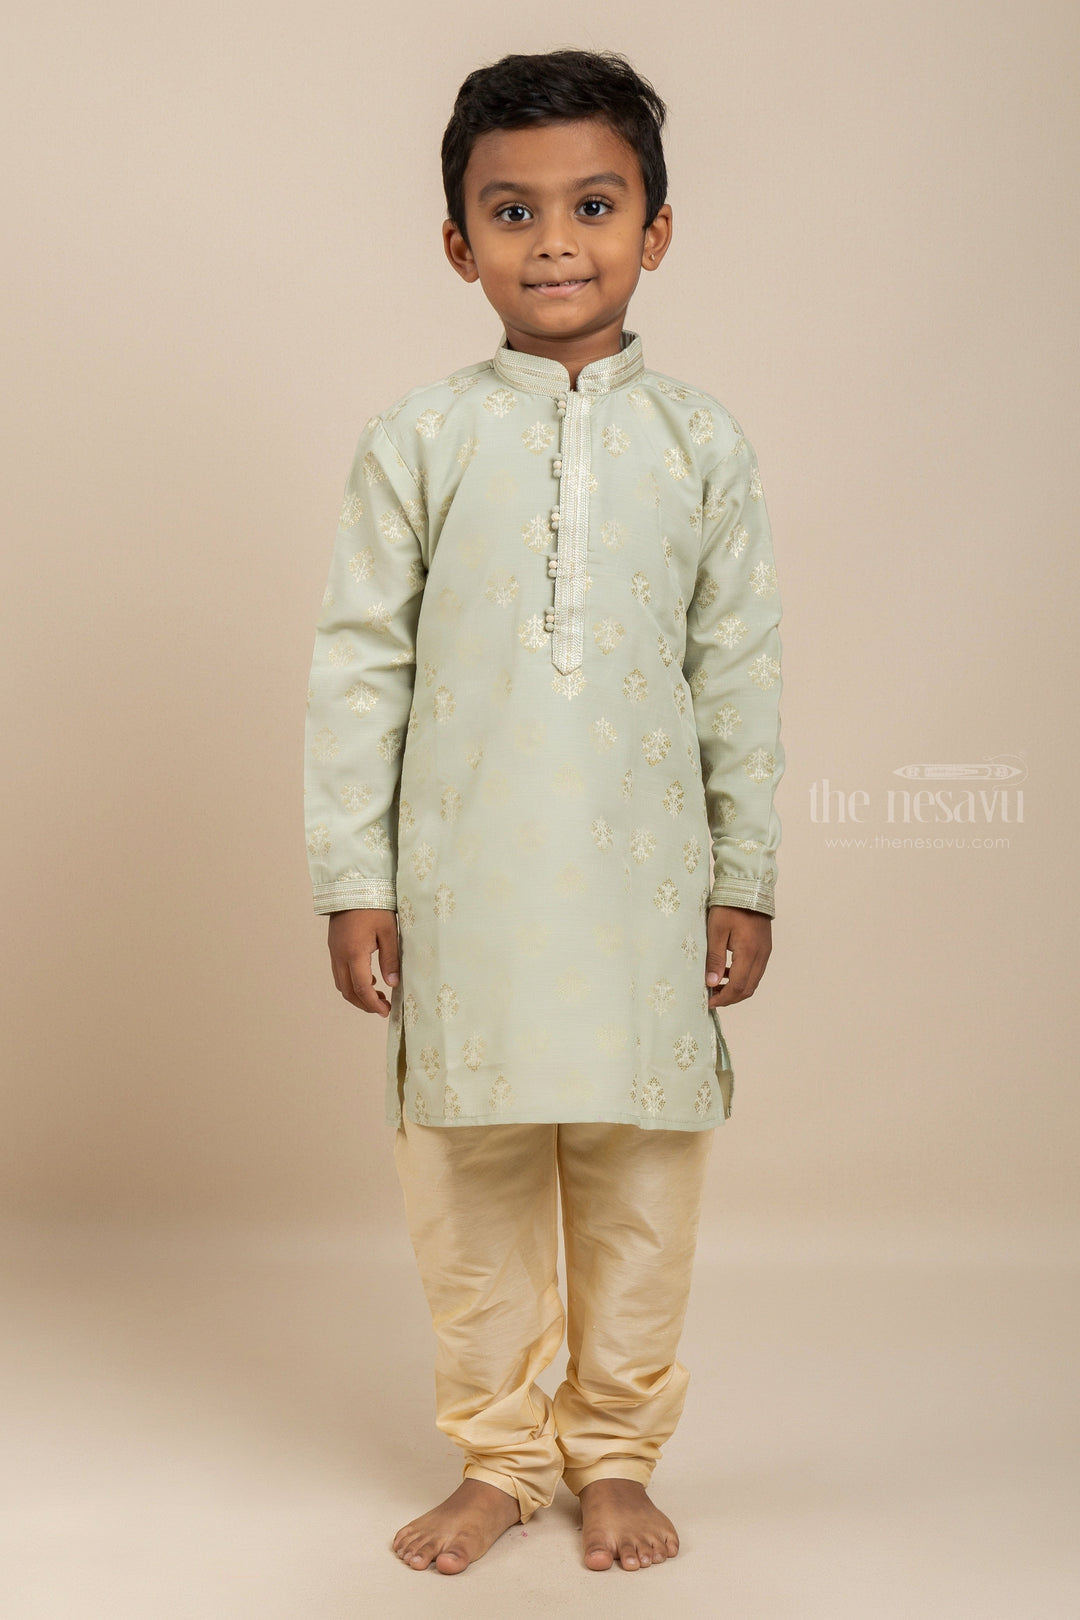 The Nesavu Boys Kurtha Set Trendy Sea Green Silk Cotton Kurta With Complimenting Pants For Boys Nesavu 14 (6M) / Green / Silk Blend BES240A-14 Best Ethnic Wear Collection For Boys| Exclusive Designs| The Nesavu